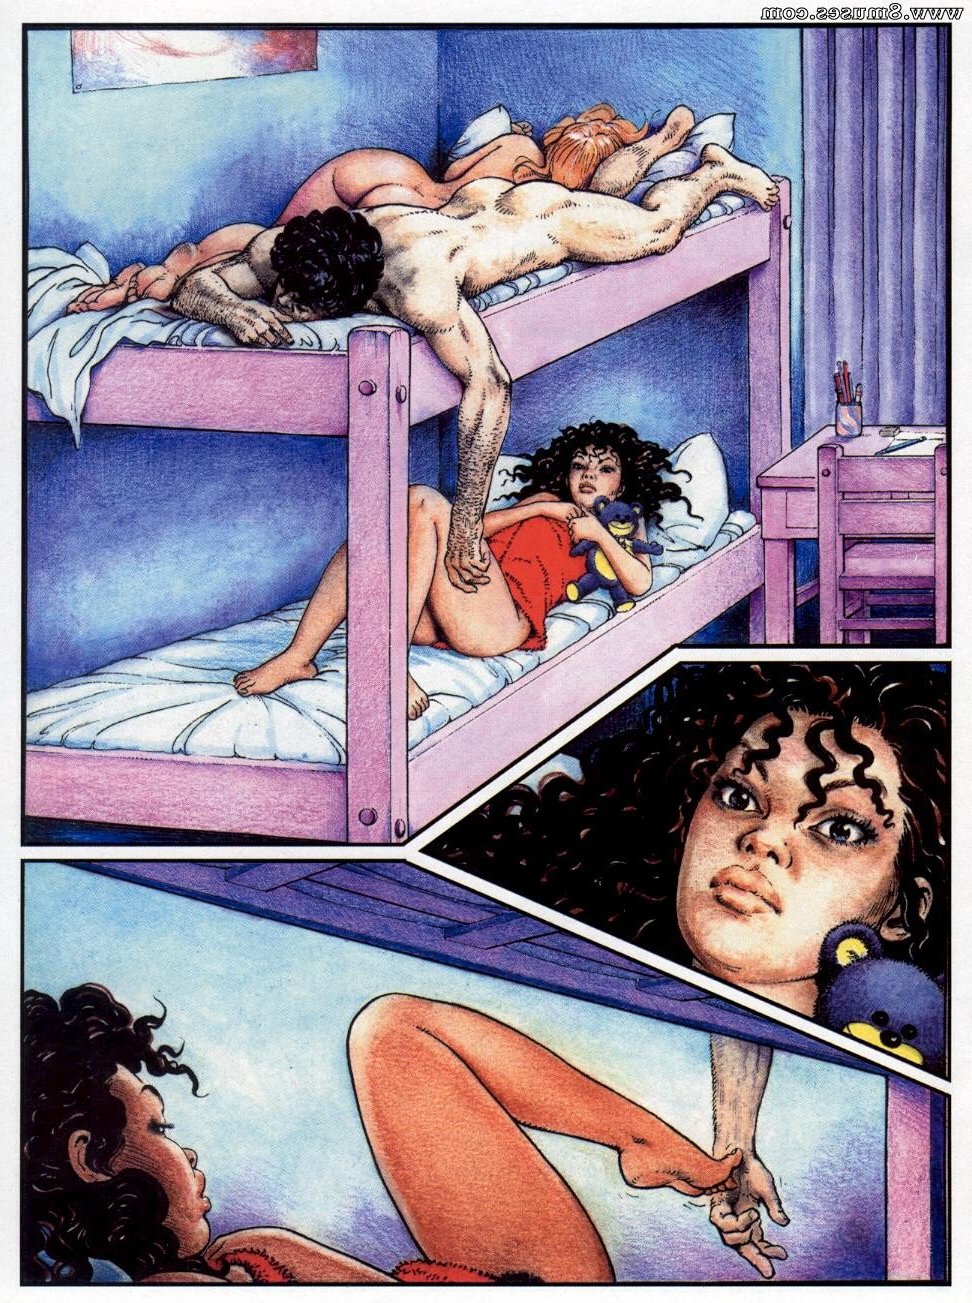 Free online erotic comics